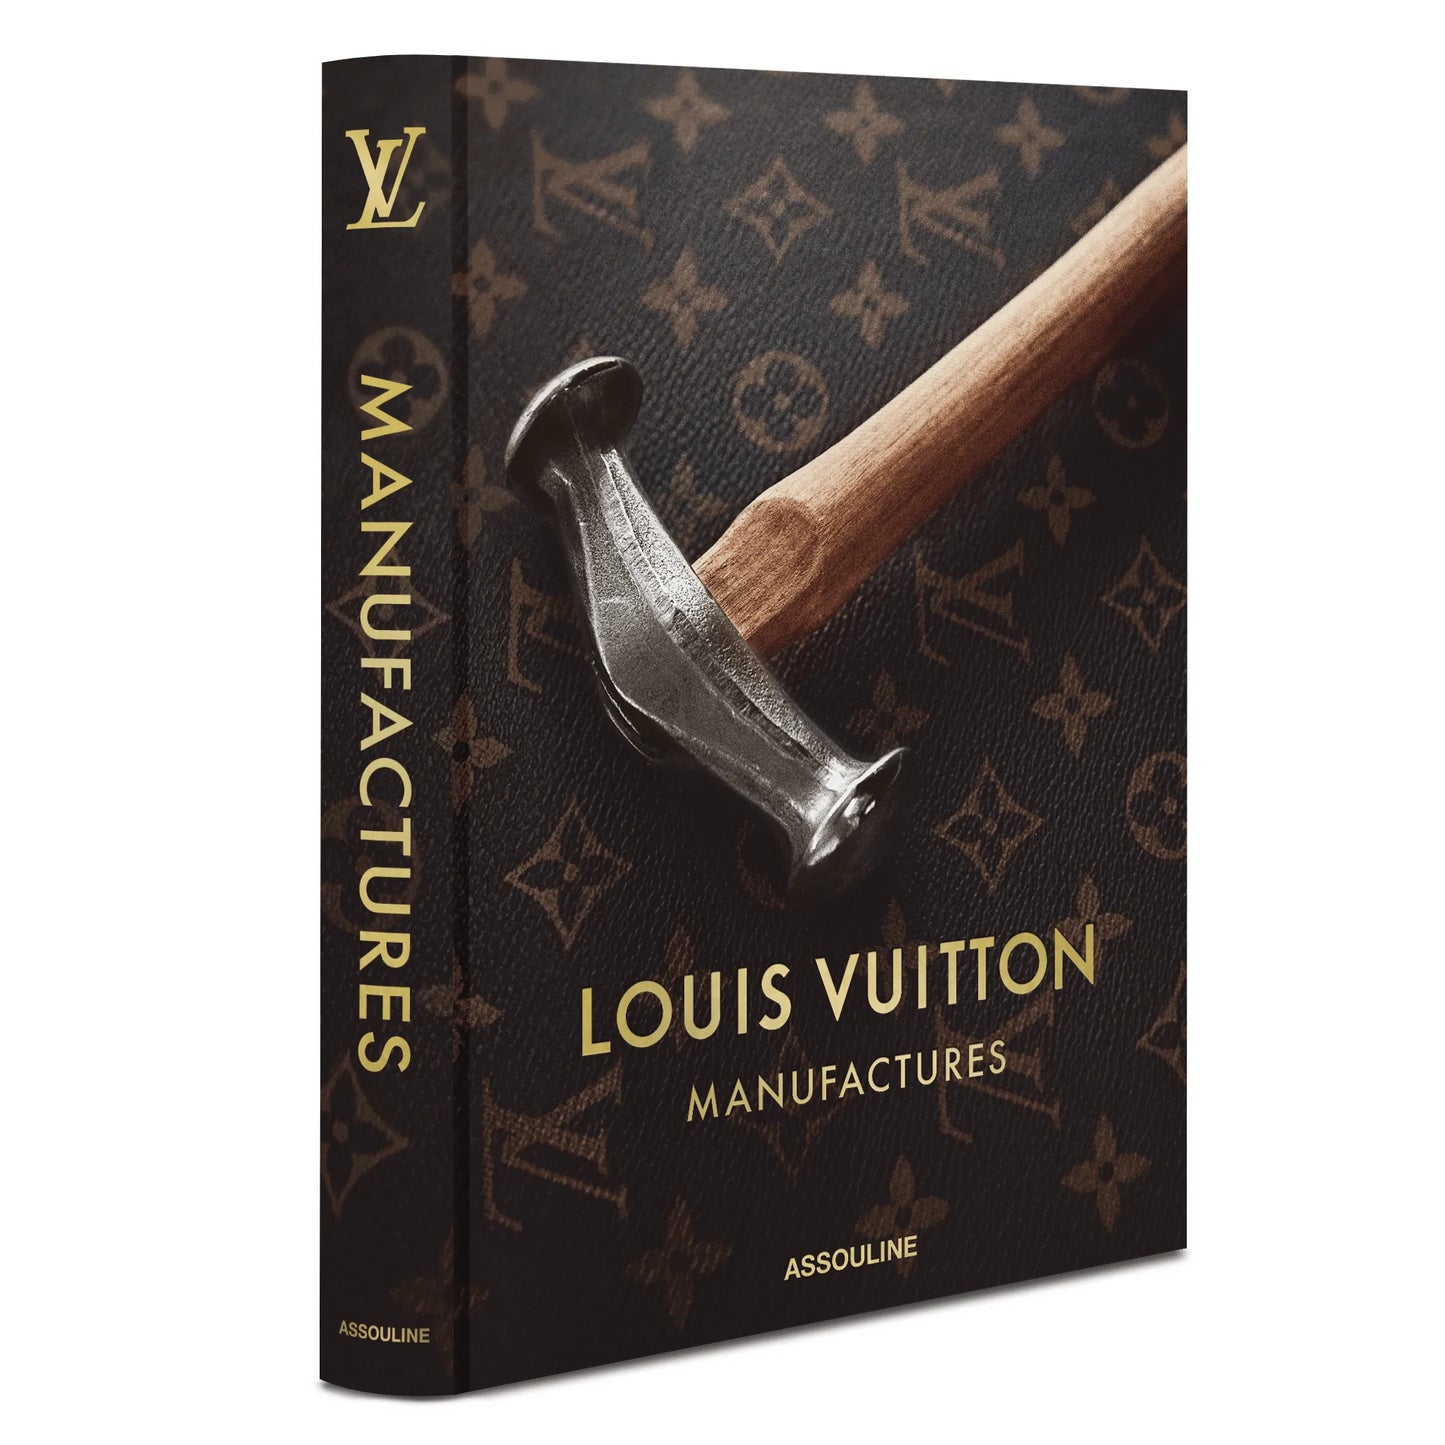 LOUIS VUITTON MANUFACTURES BOOK - $95